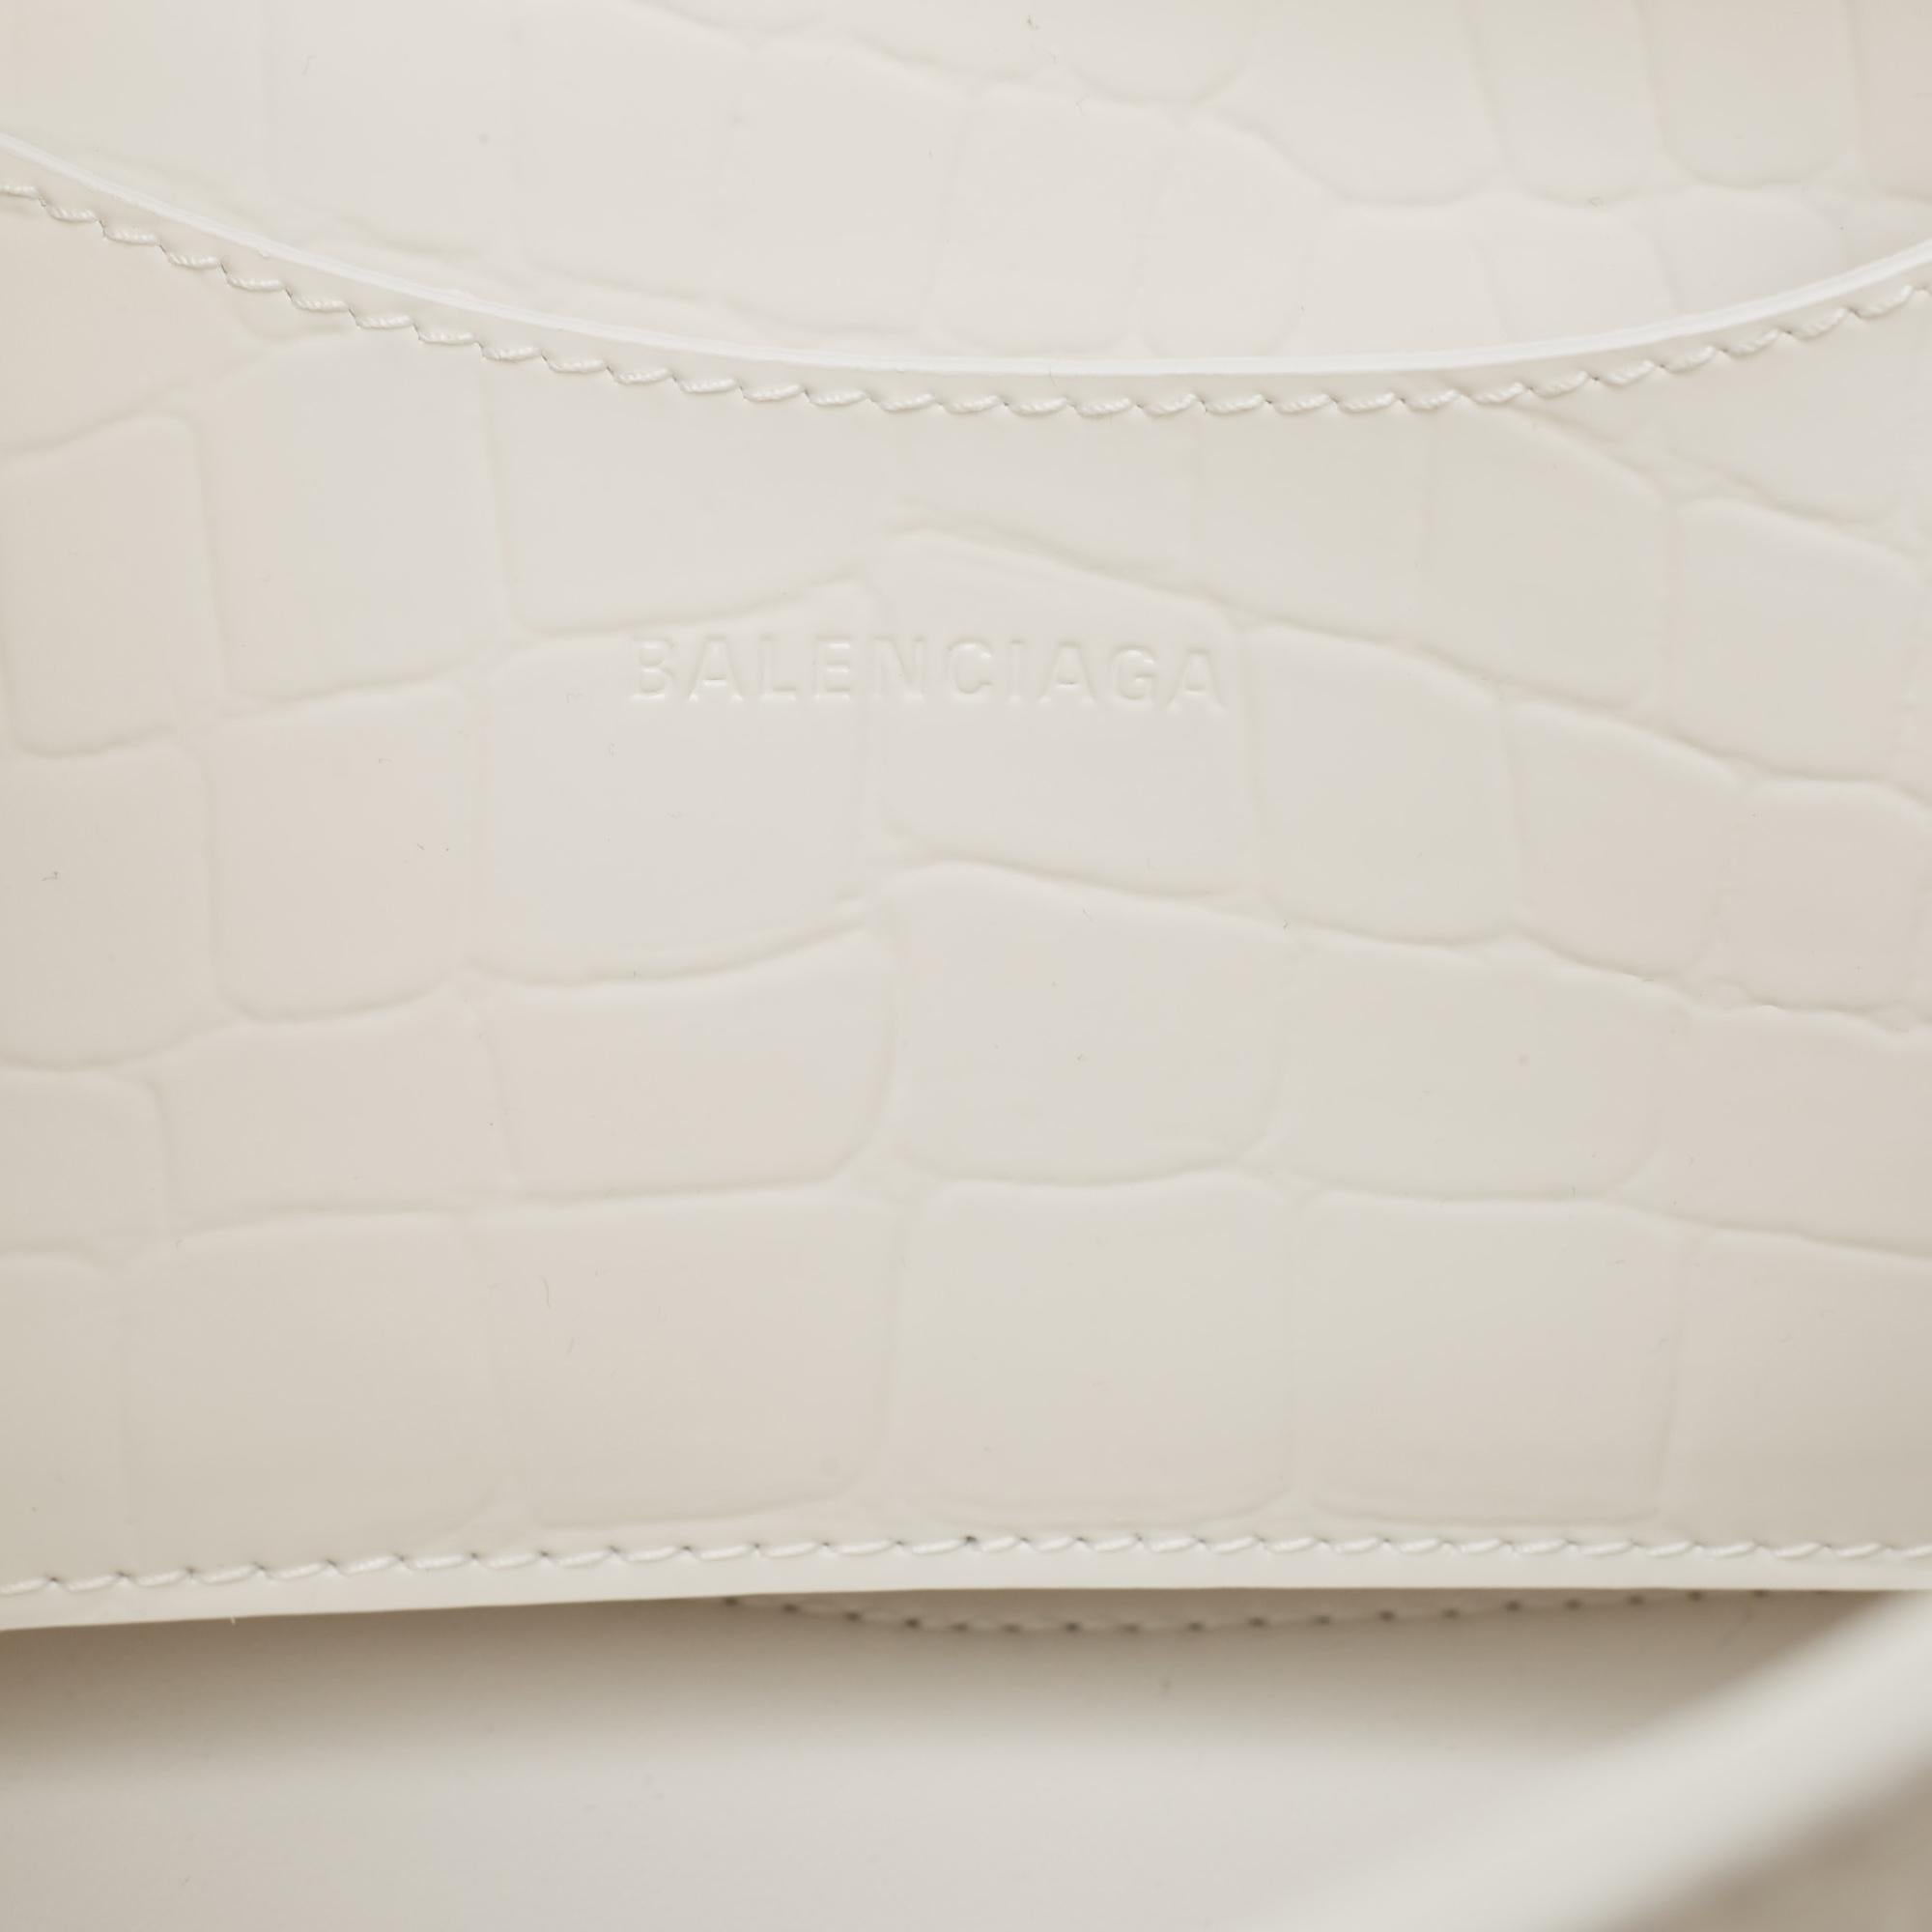 Balenciaga Off White Croc Embossed Leather Small Neo Classic Tote For Sale 8